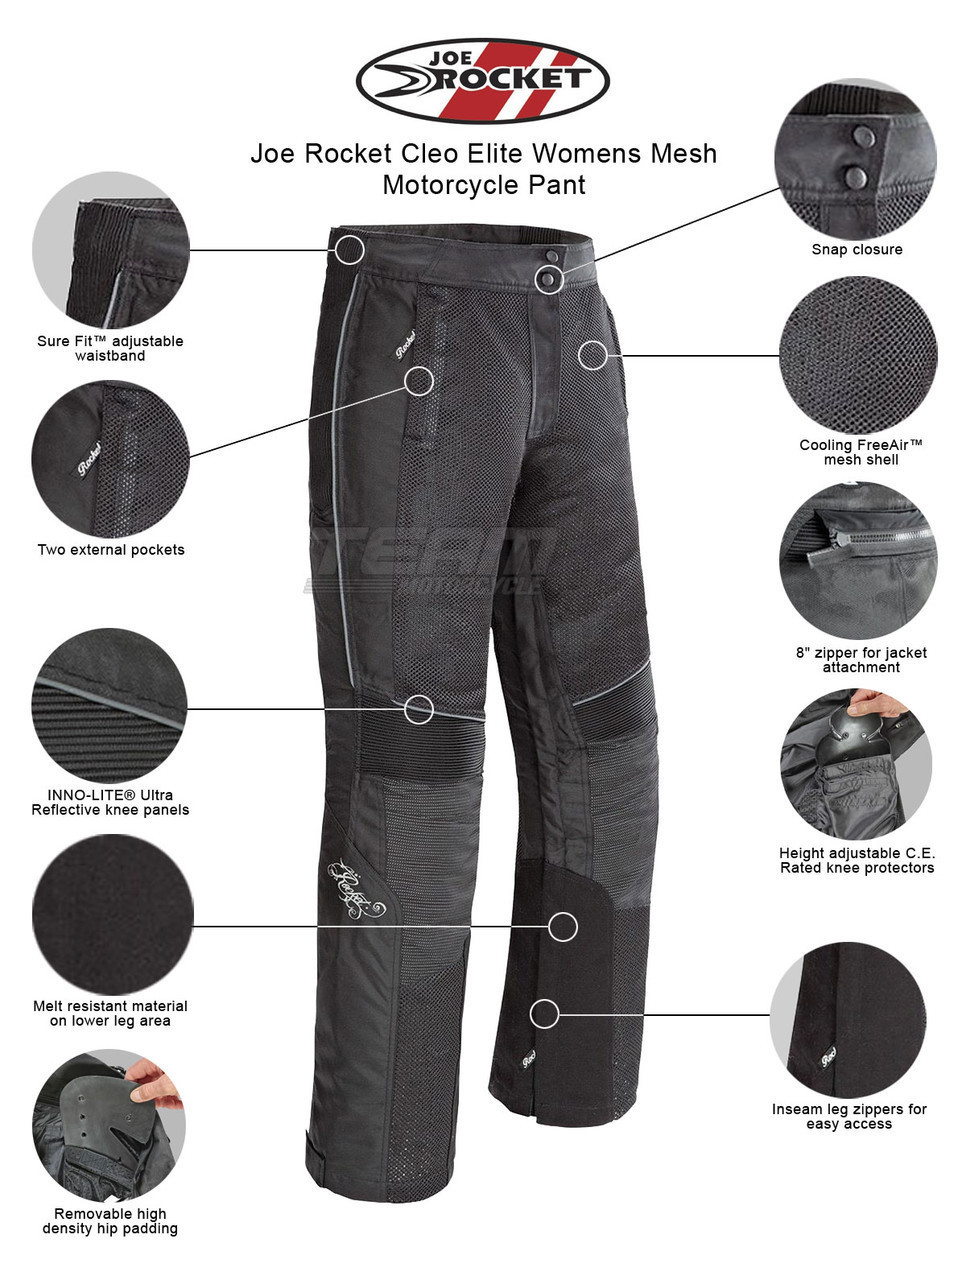 Mens Motorcycle Mesh Pants Full Leg Zipper